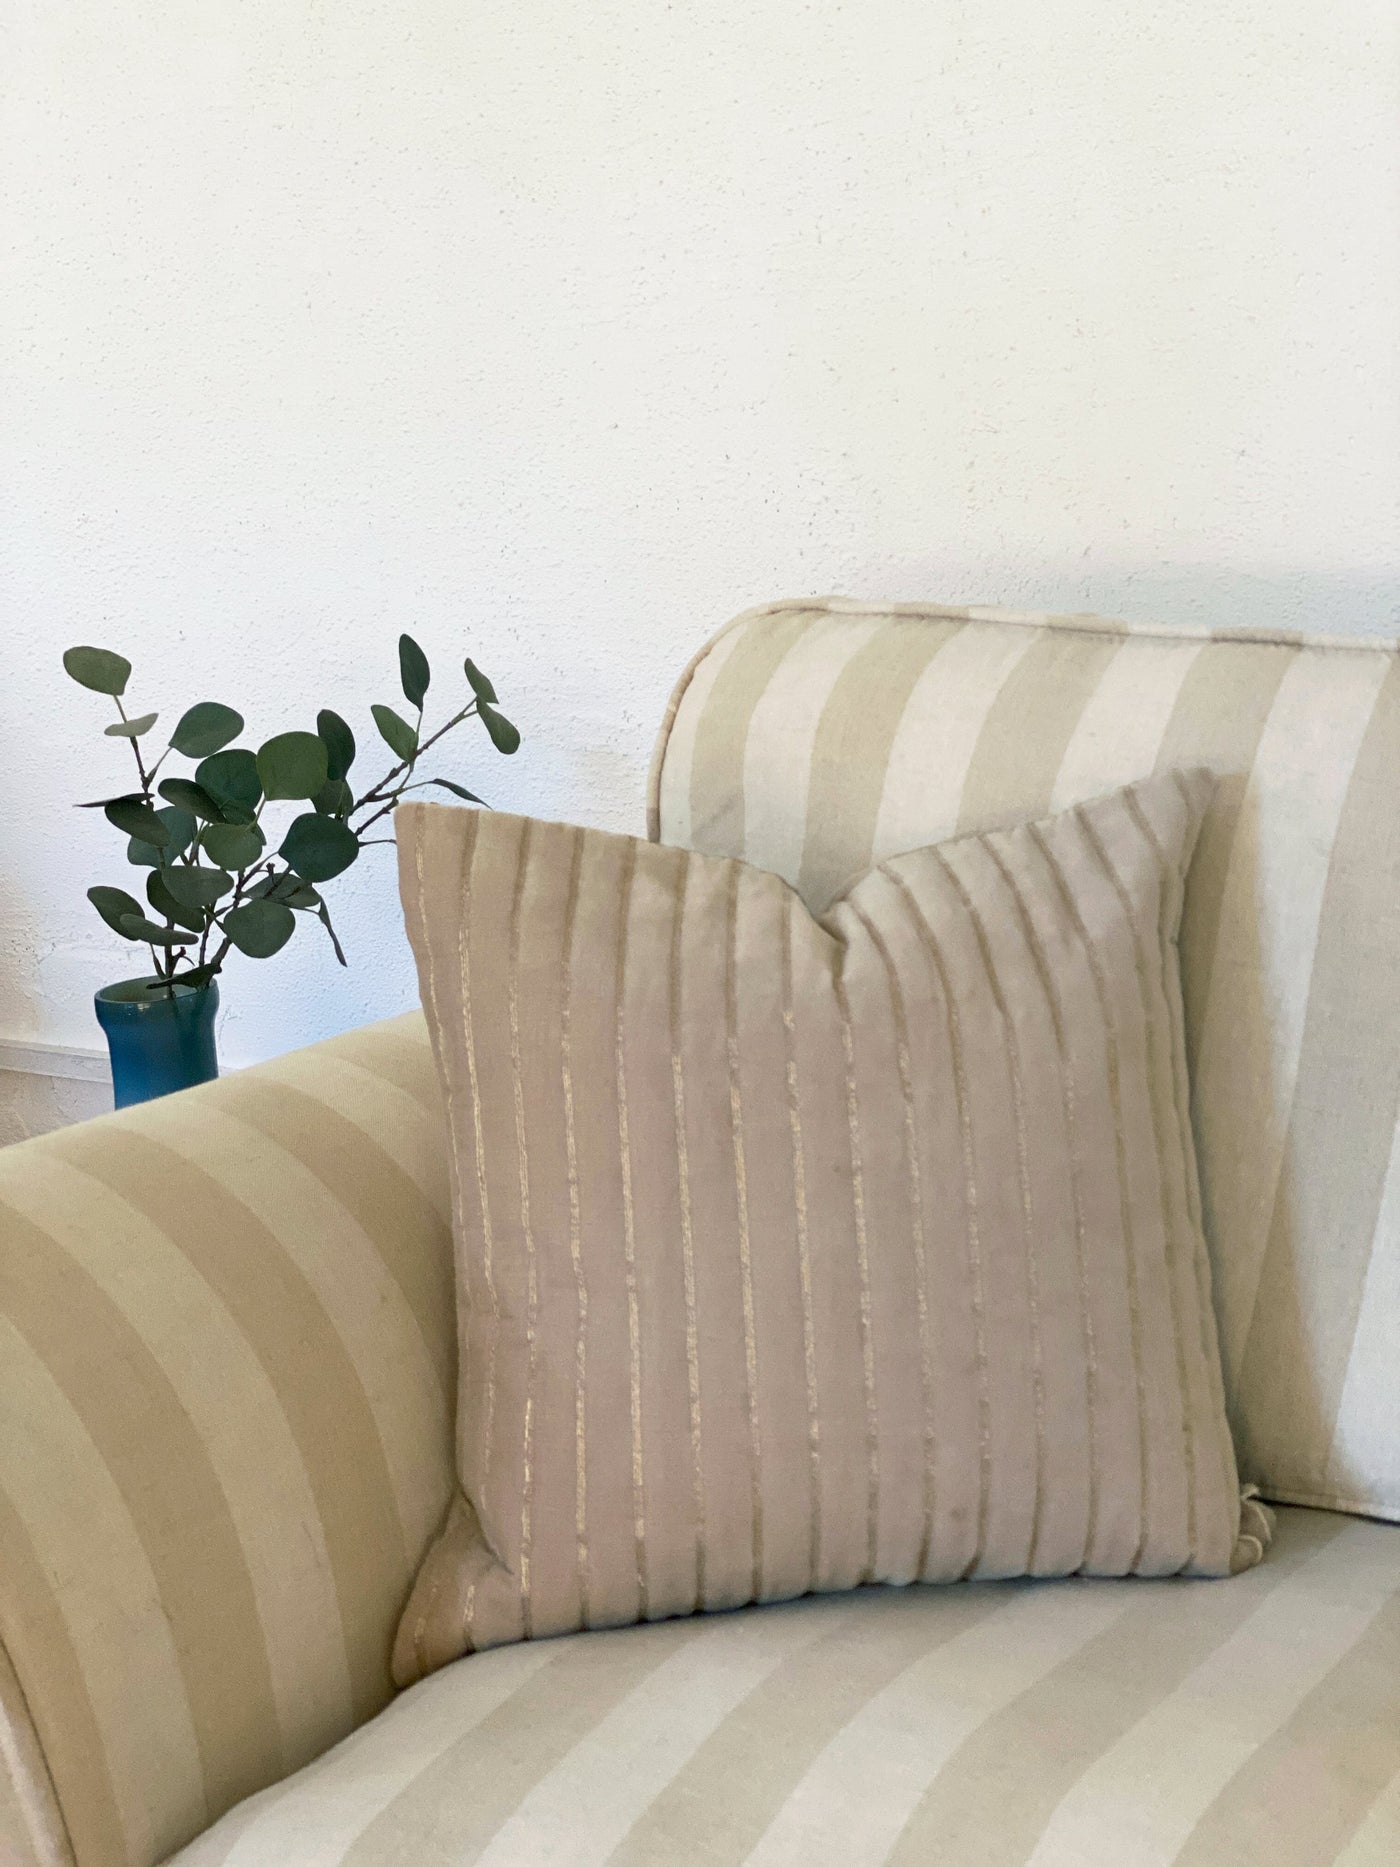 Eden Striped Cushion Cover